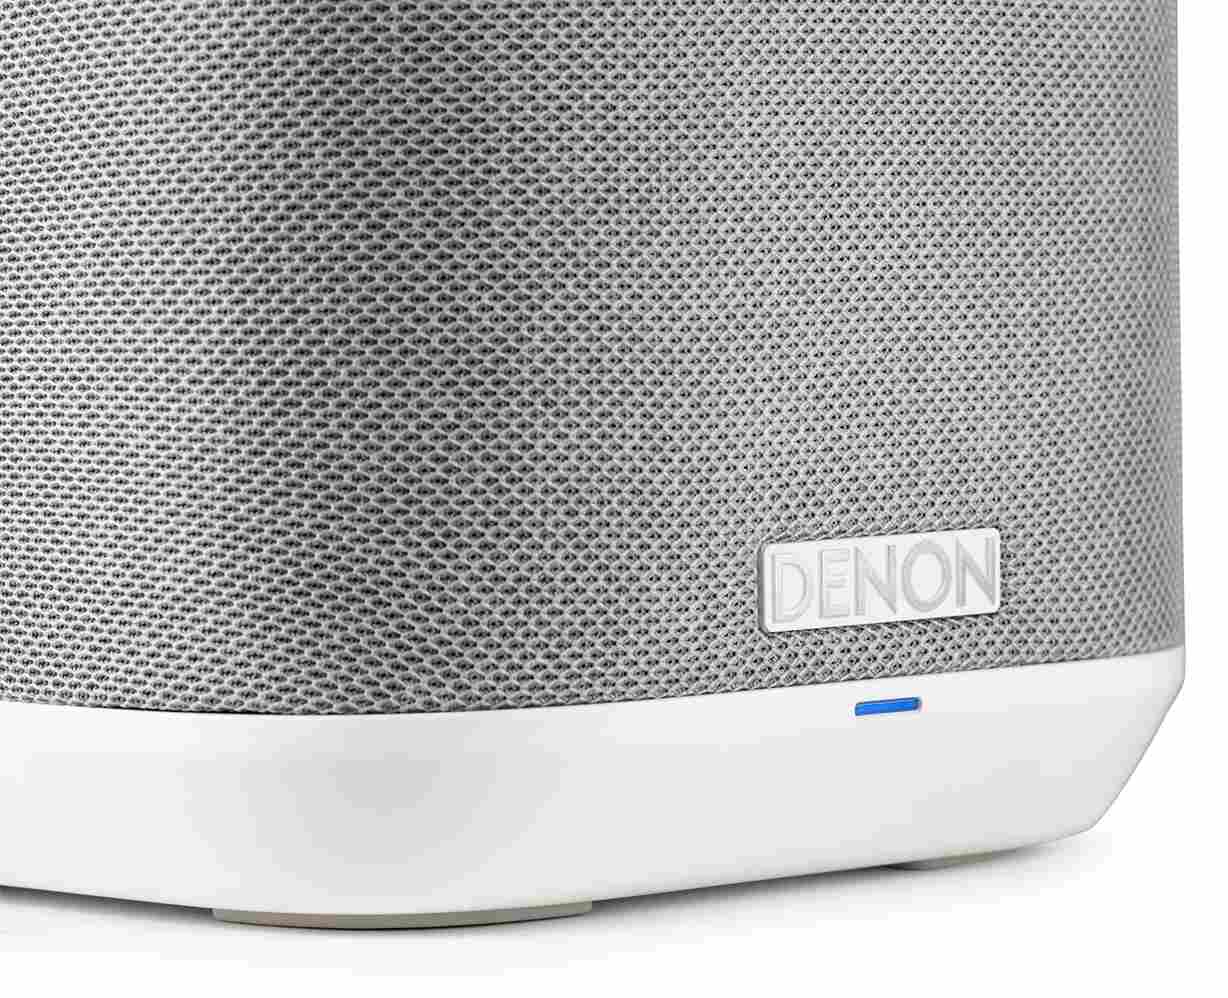 Denon Home 150 wit - detail - Wifi speaker